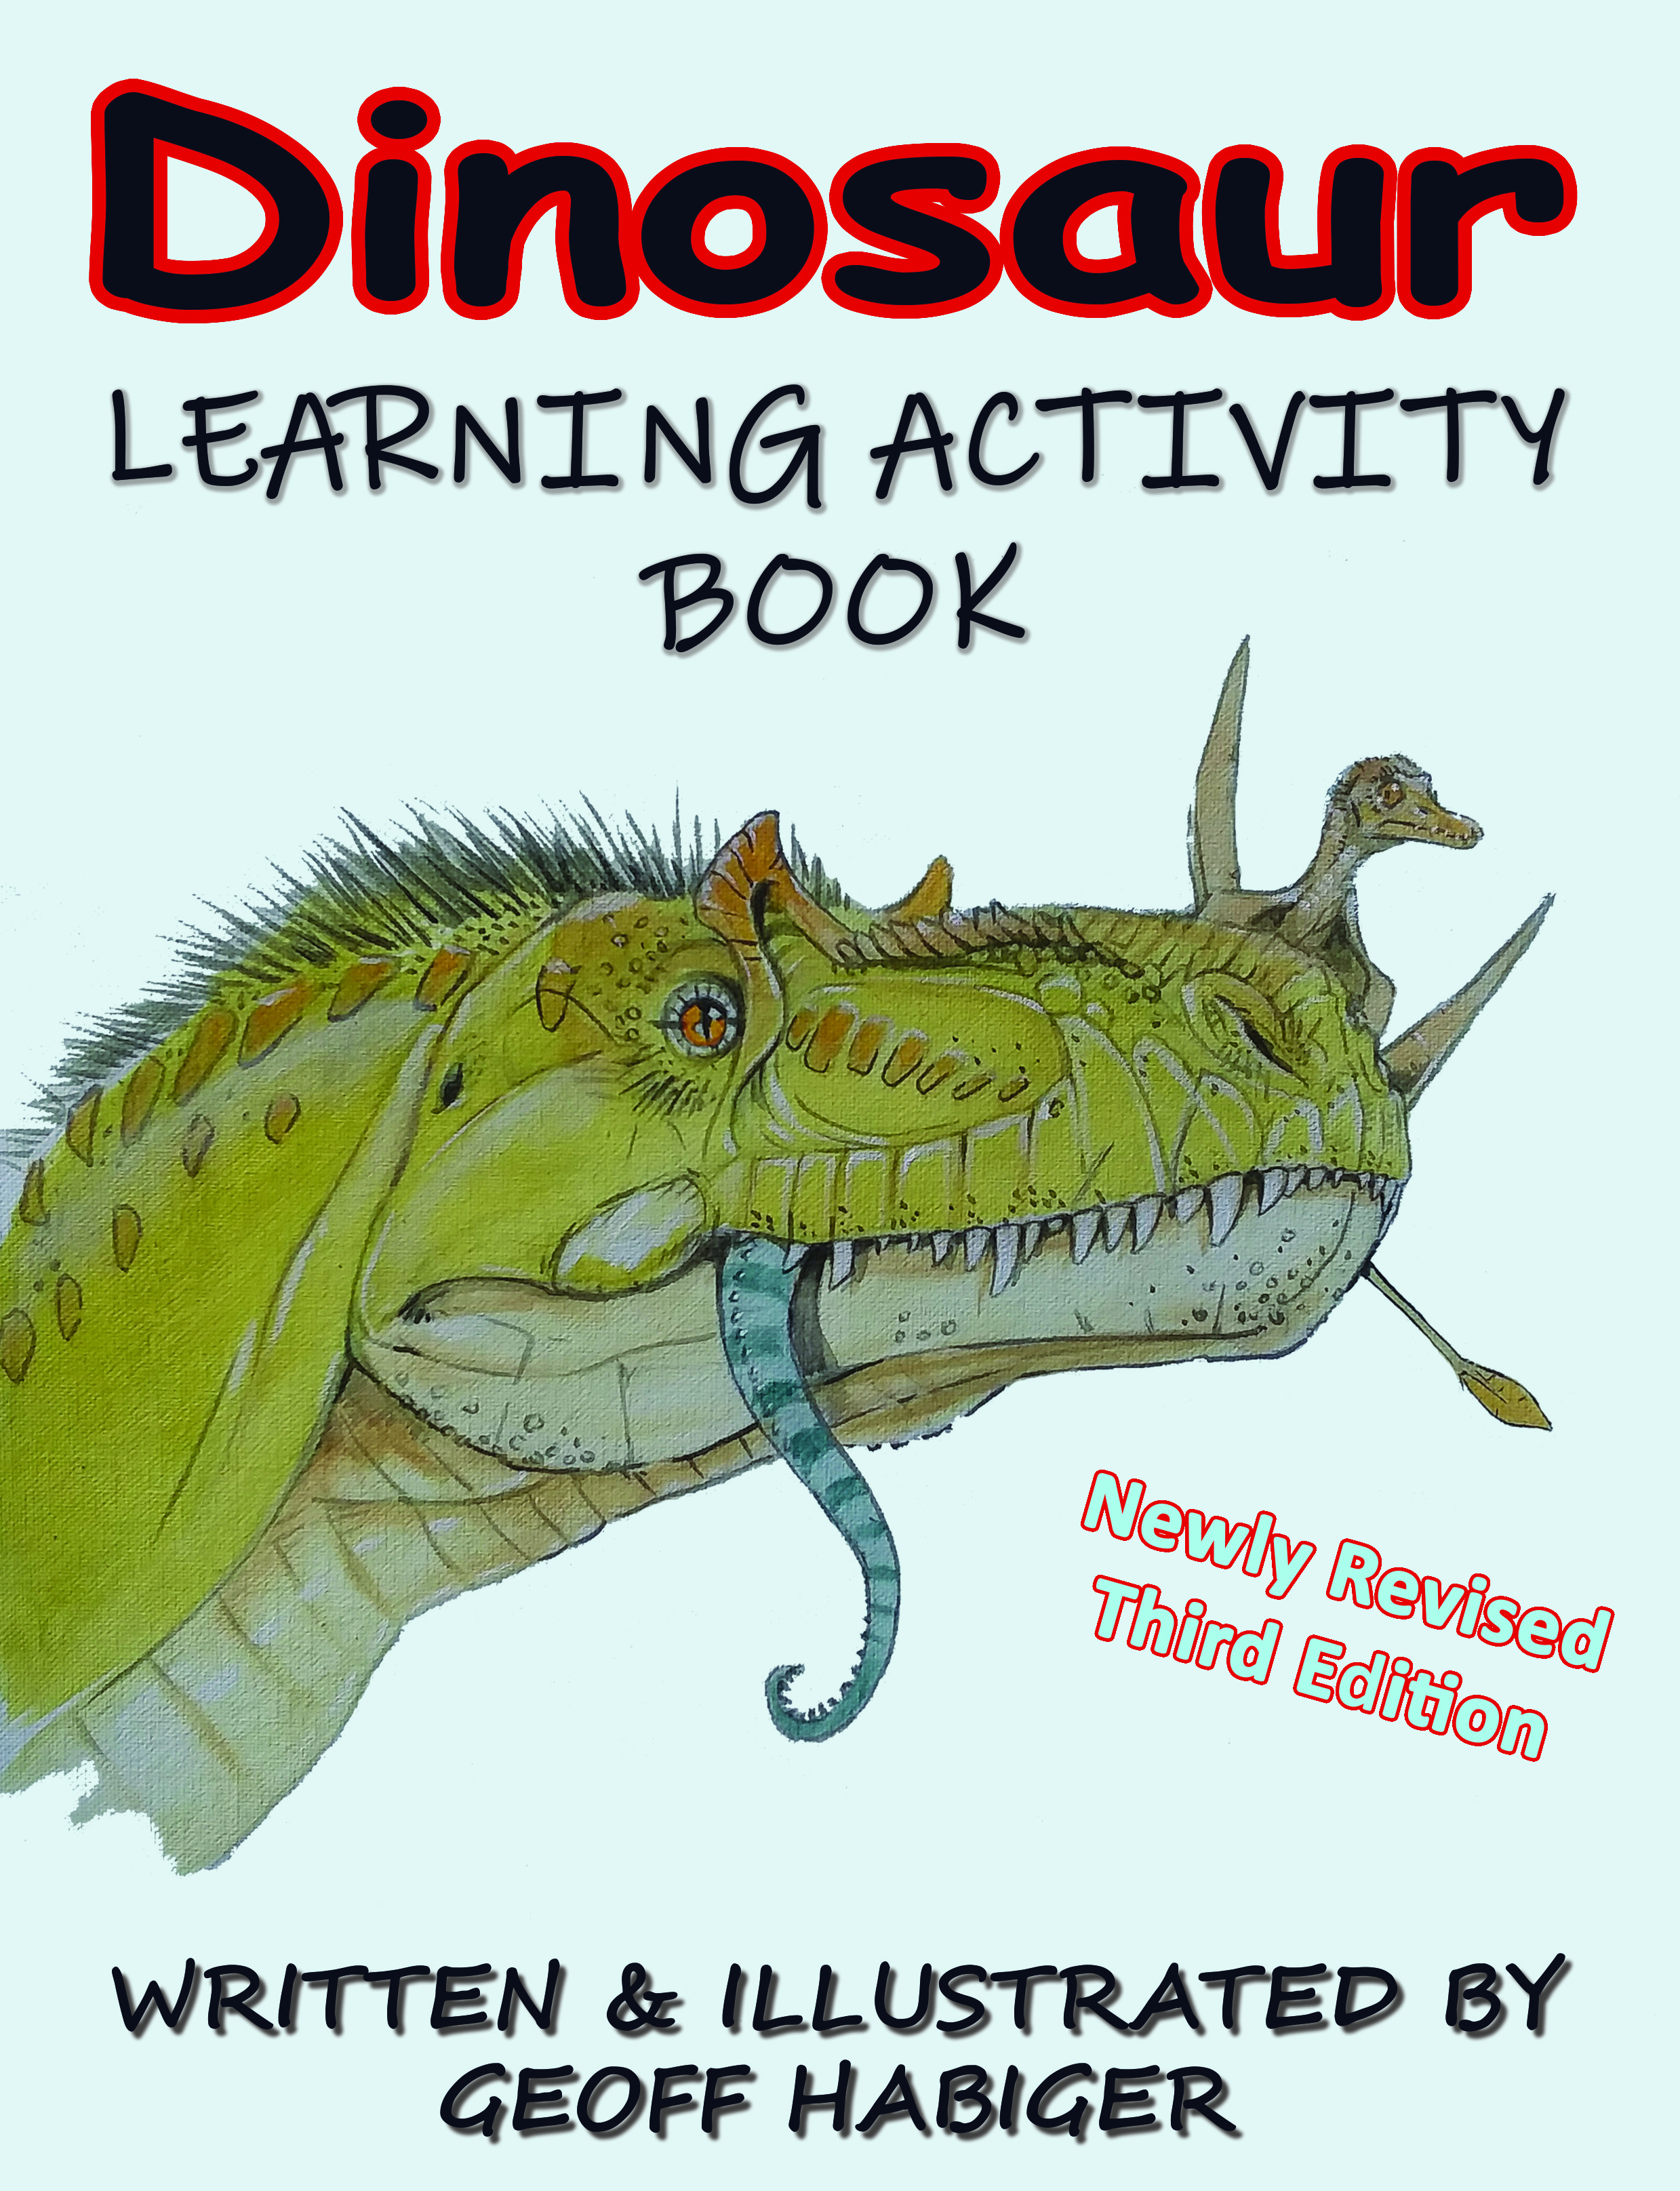 Dinosaur Learning Activity Book